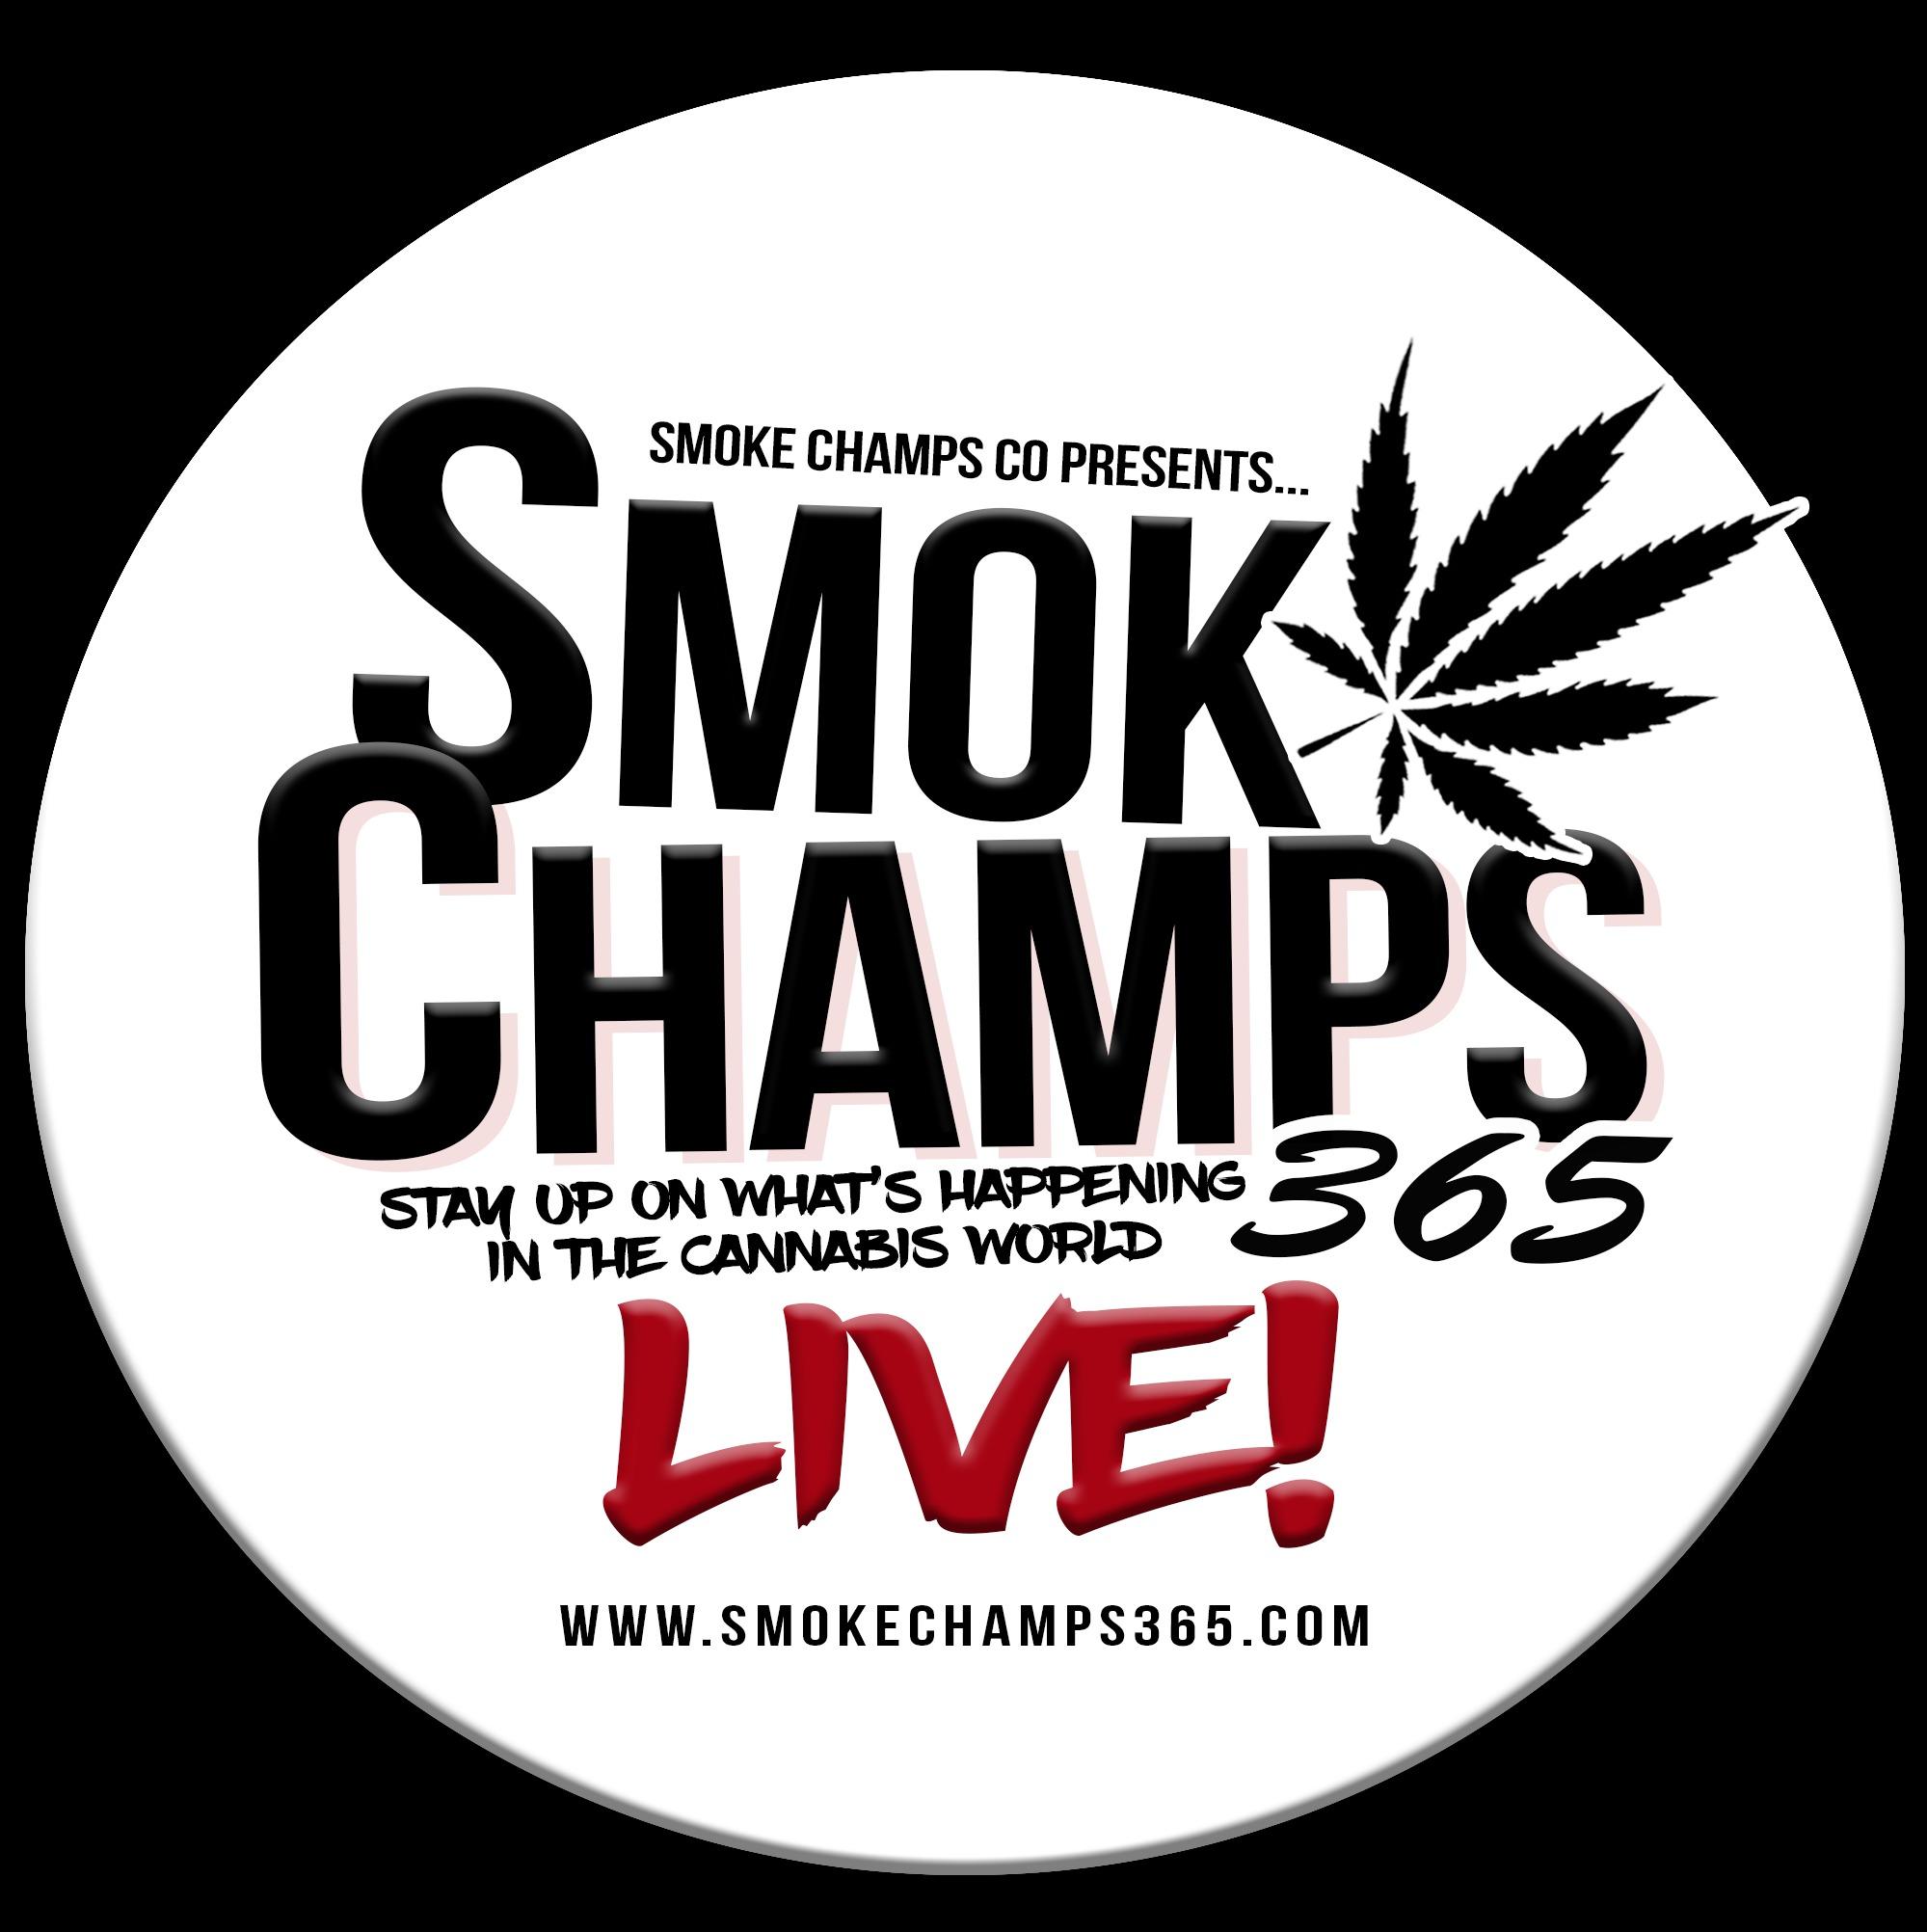 "The Smoke" Podcast on Smoke Champs 365